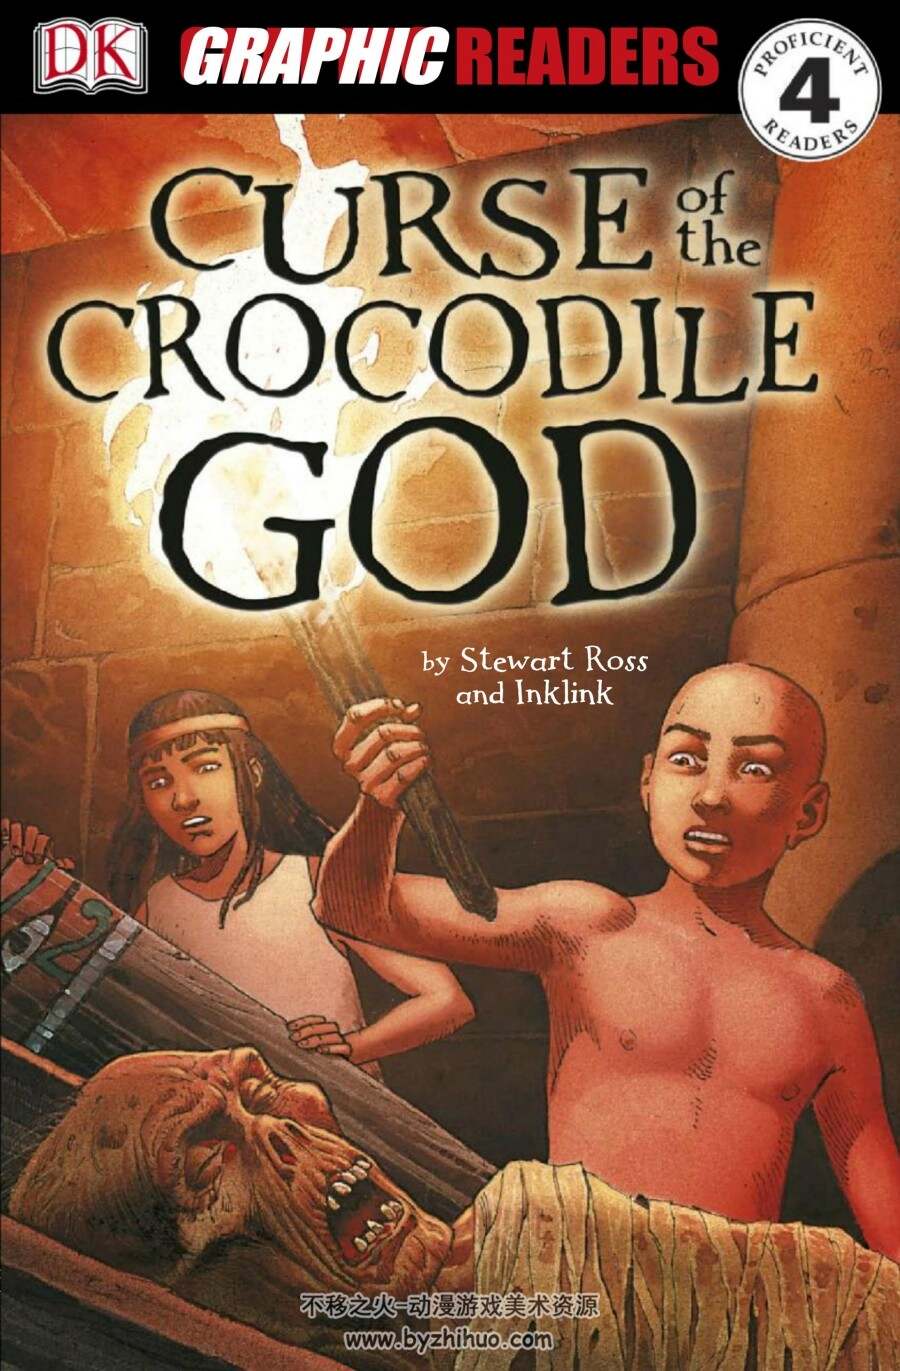 DK古文明系列漫画 GraphicReaders4 埃及 Curse of the Crocodile God 百度网盘下载